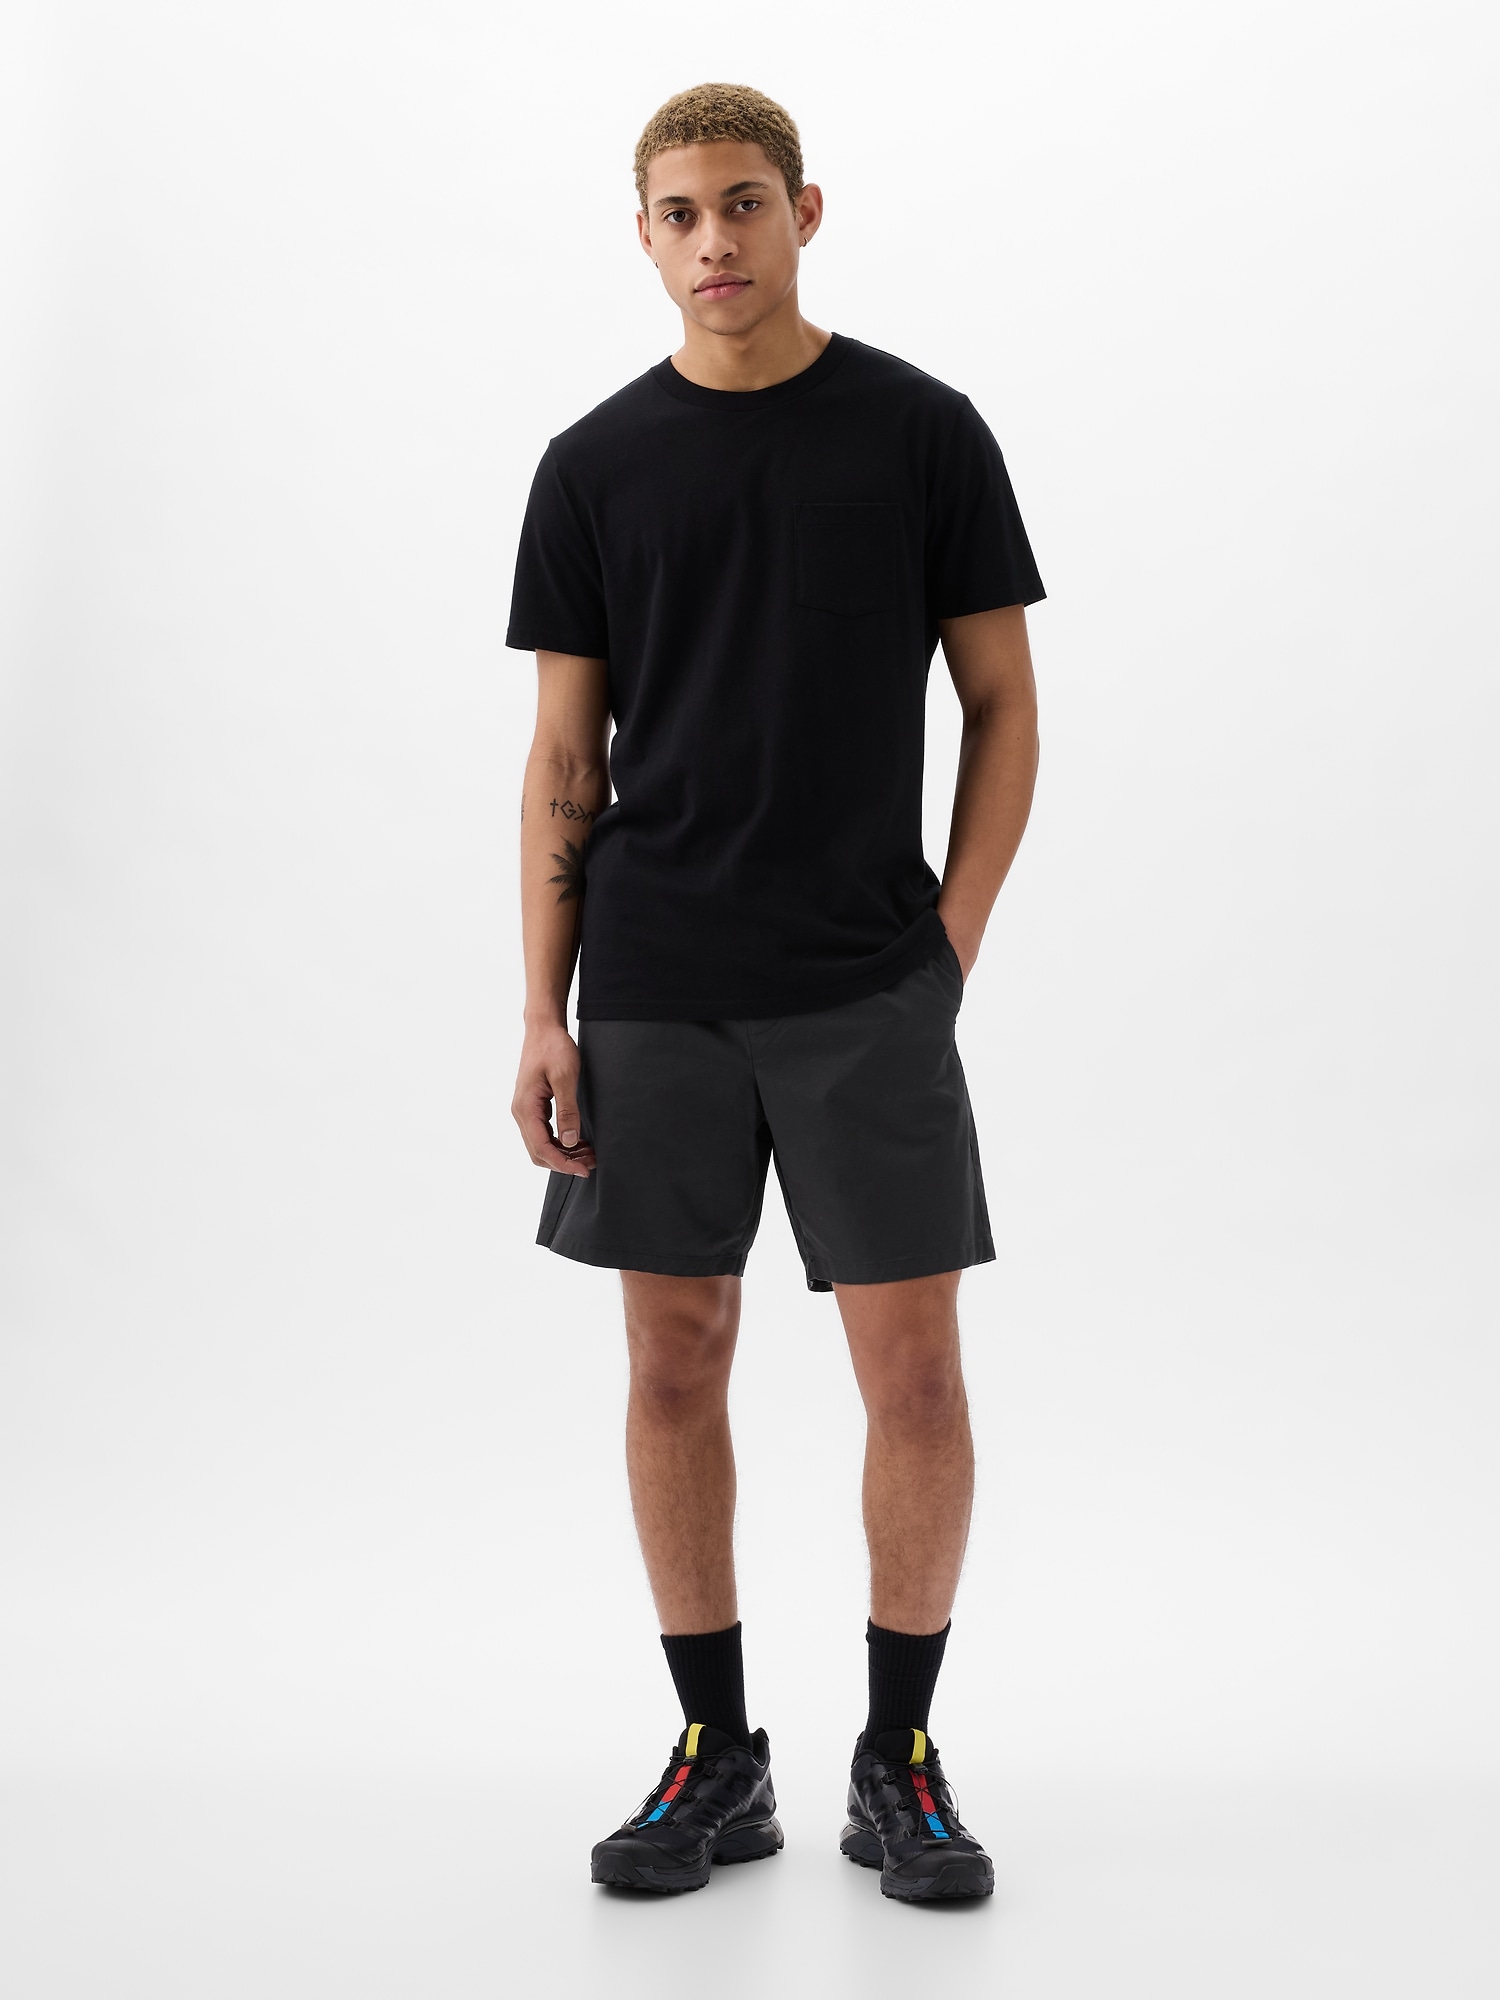 GAP Shorts with Elastic Waistband - Men's